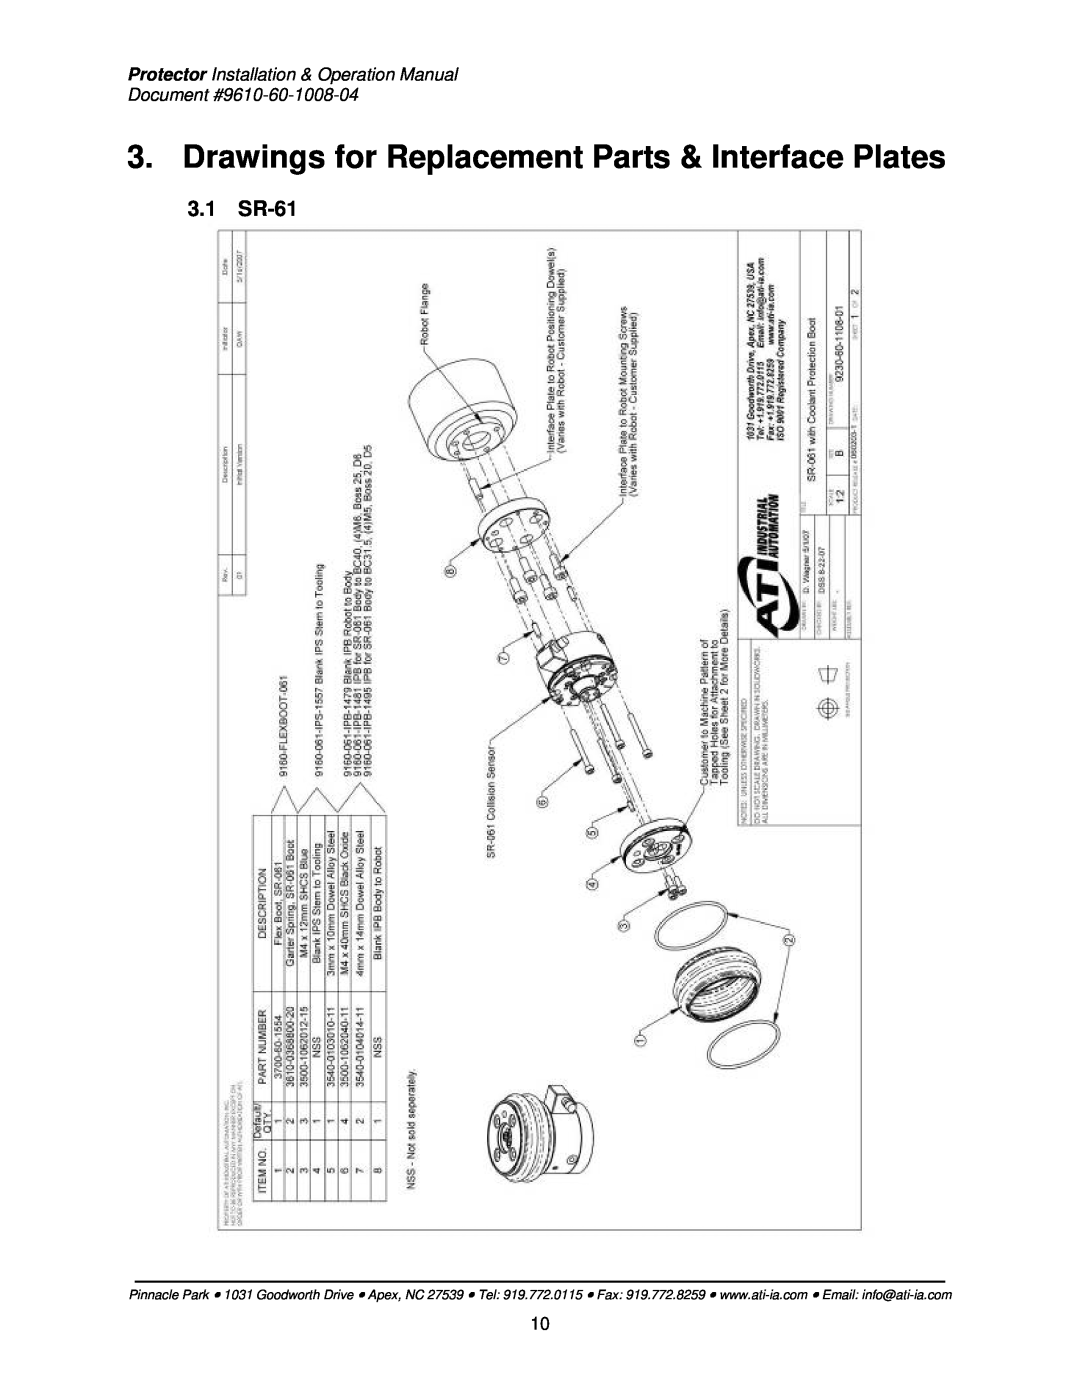 ATI Technologies SR-221, SR-131, SR-176, SR-81, SR-101 Drawings for Replacement Parts & Interface Plates, 3.1 SR-61 